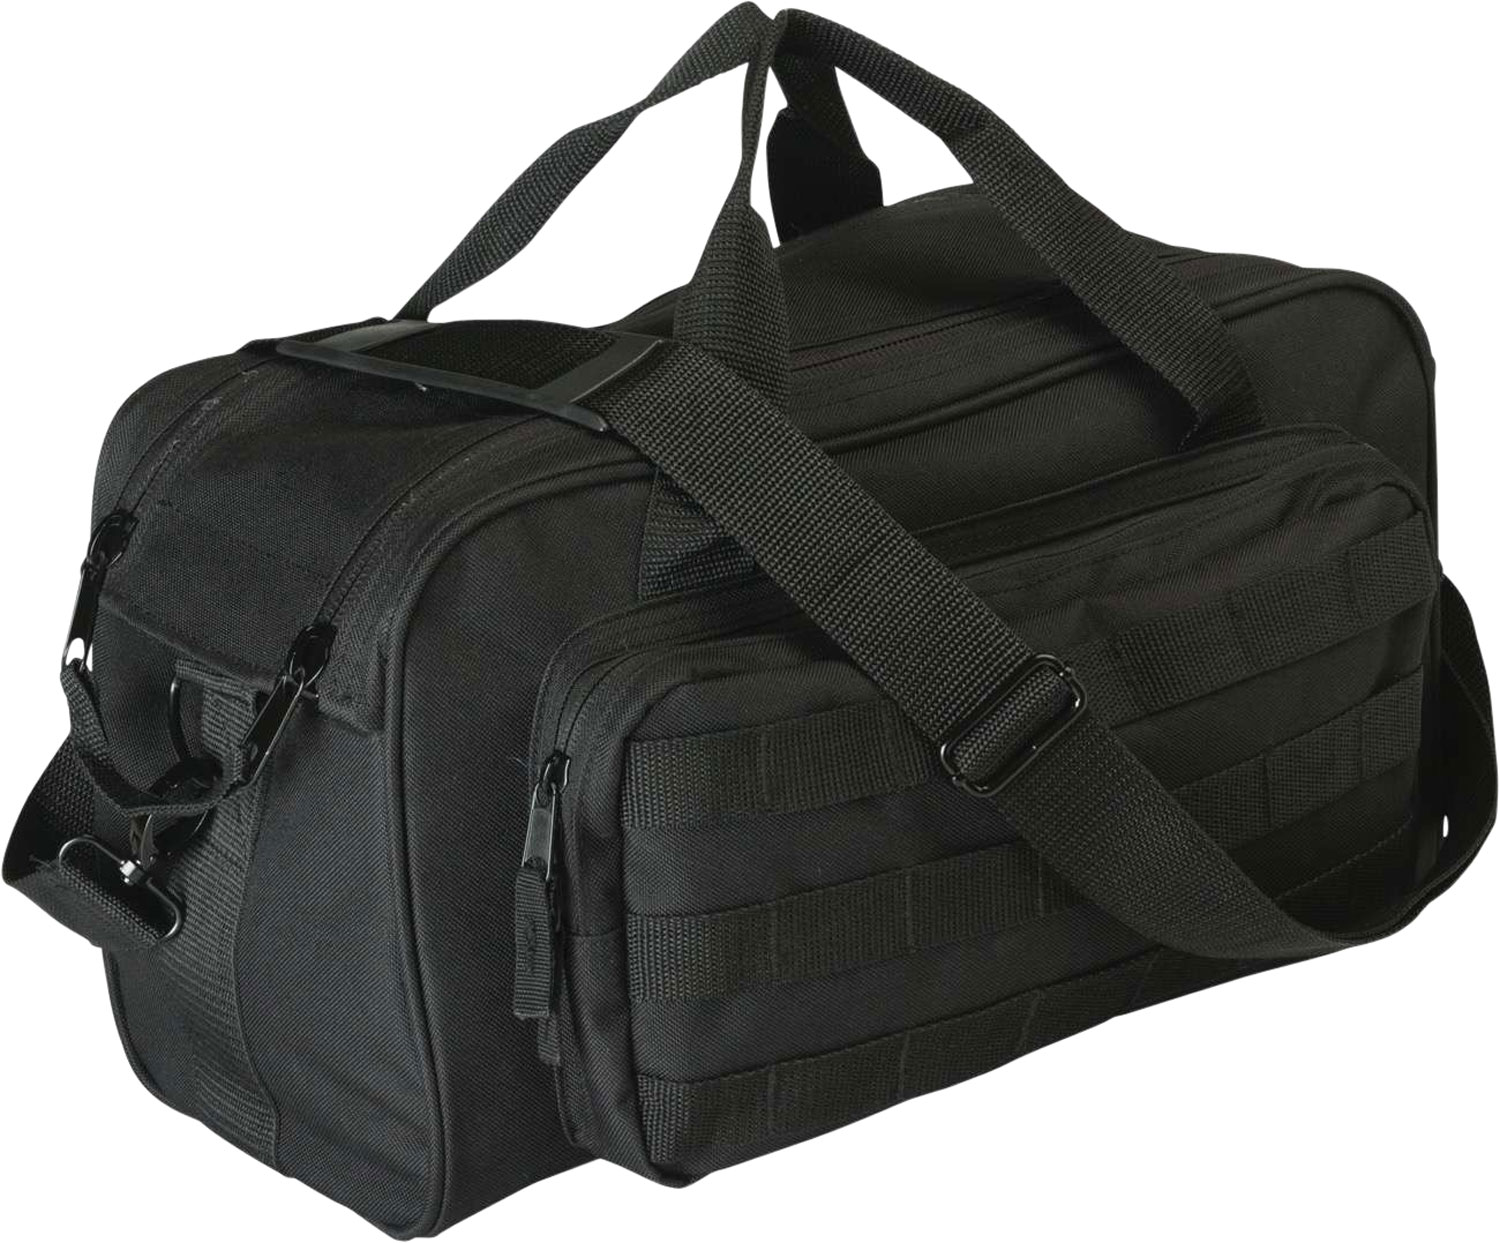 Allen 2205 Range Bag  Black Cordura with MOLLE Loops, Detachable Shoulder Strap & Padded Pistol Rug 15